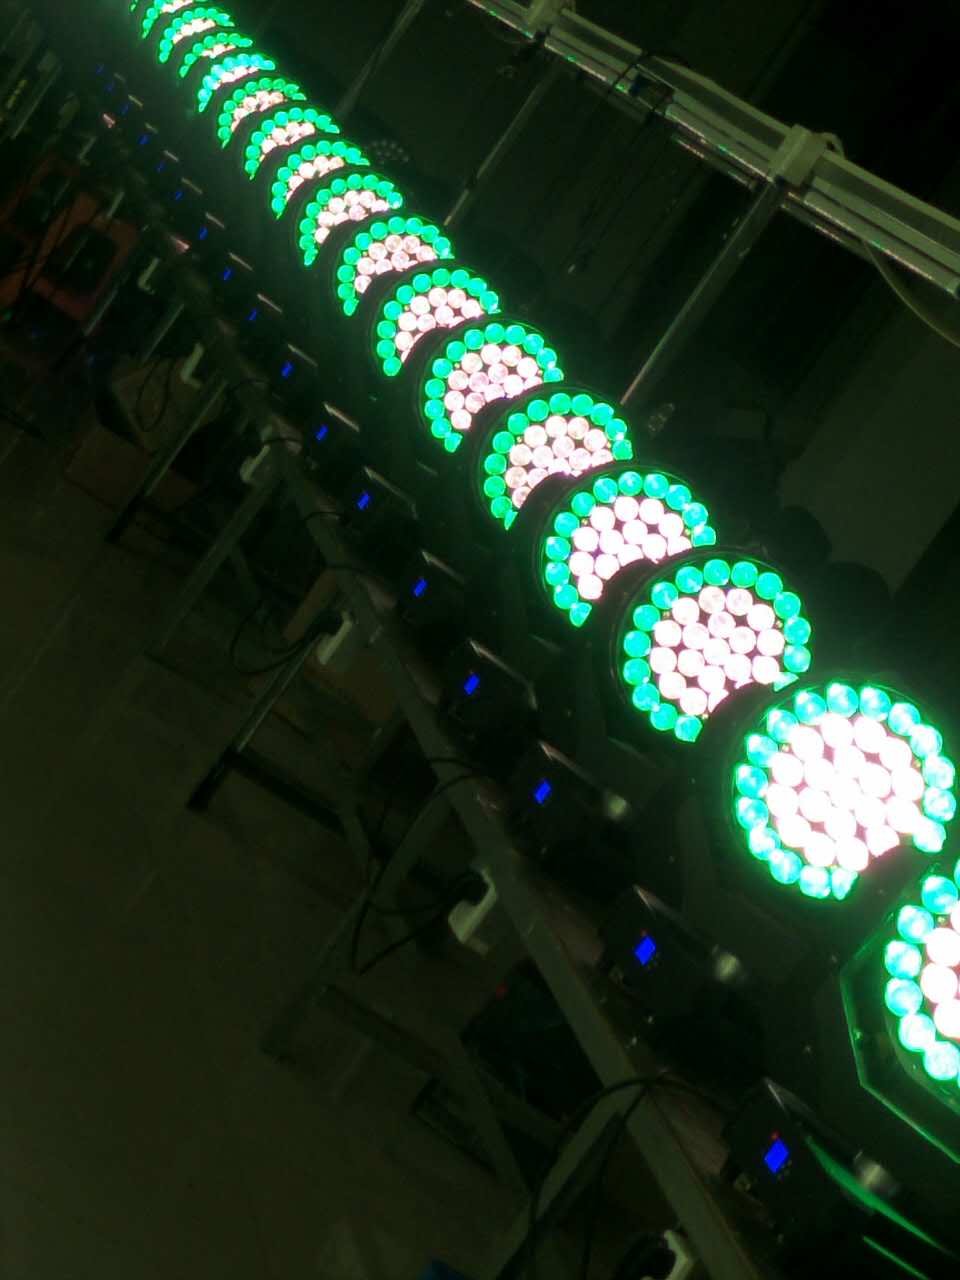 37X15W LED Moving Head Light Zoom MS-3715-5